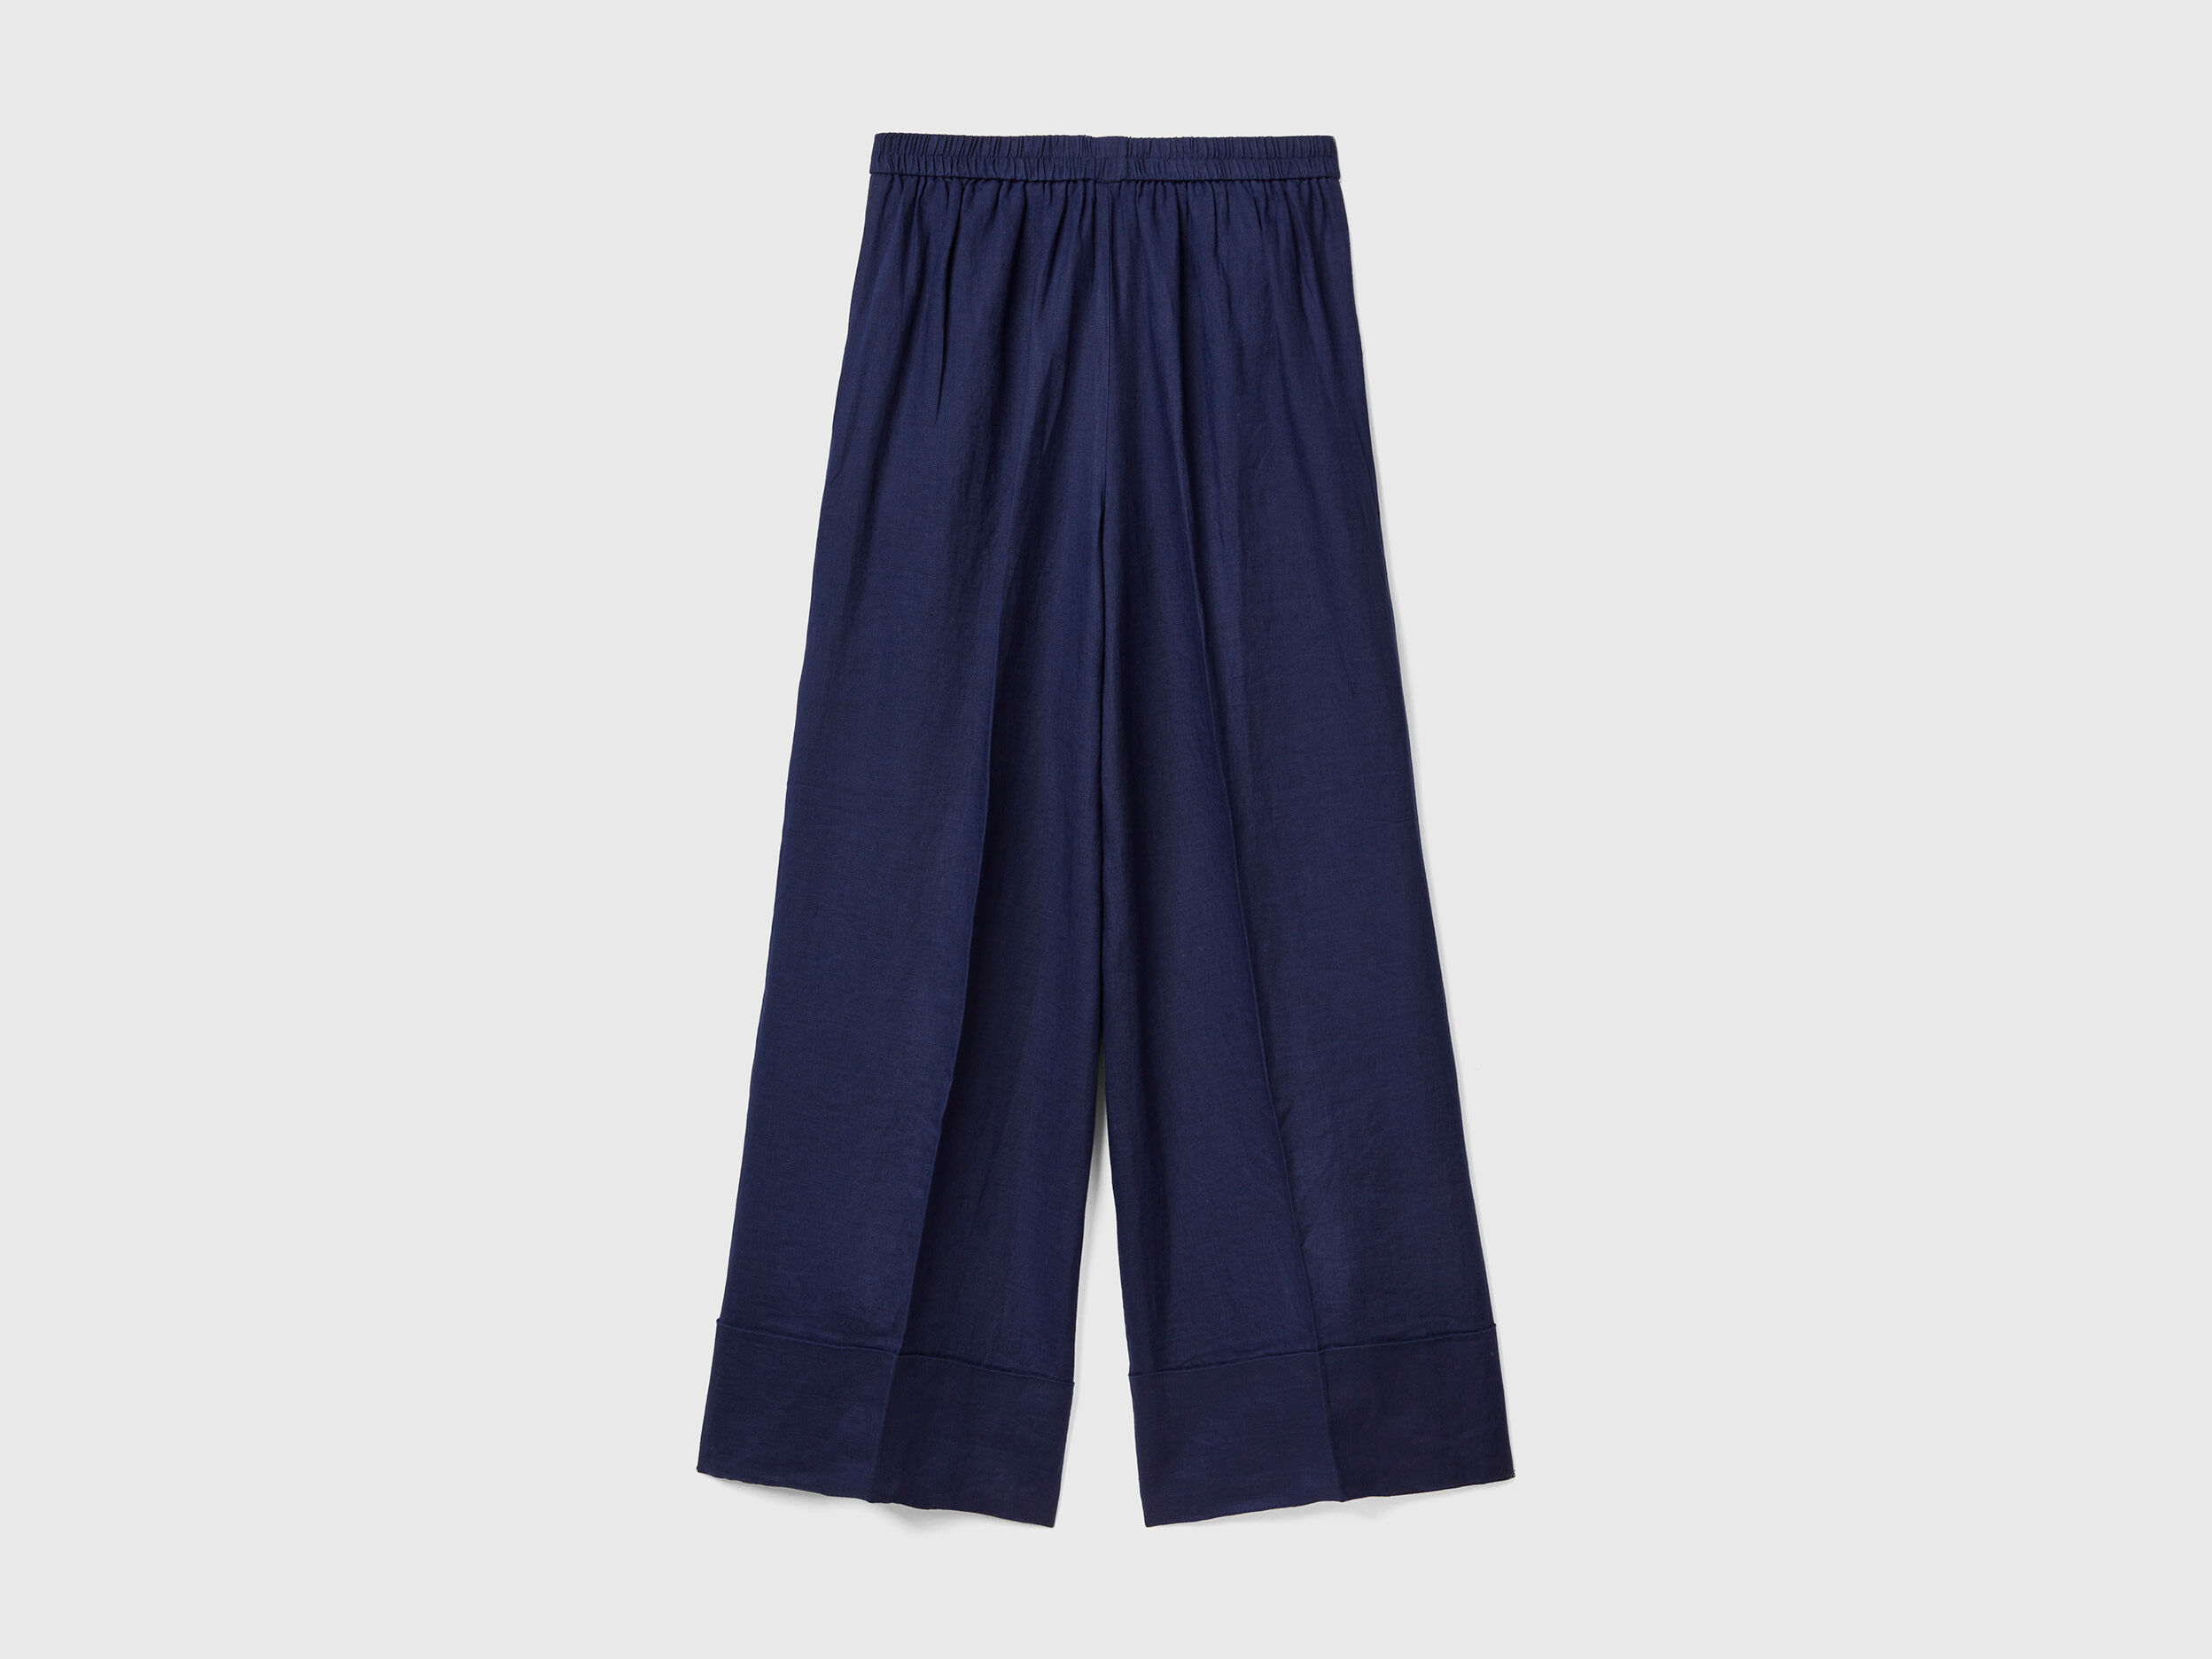 Womens Plus Size Navy Blue Palazzo Pants 1XL Wide Leg | eBay